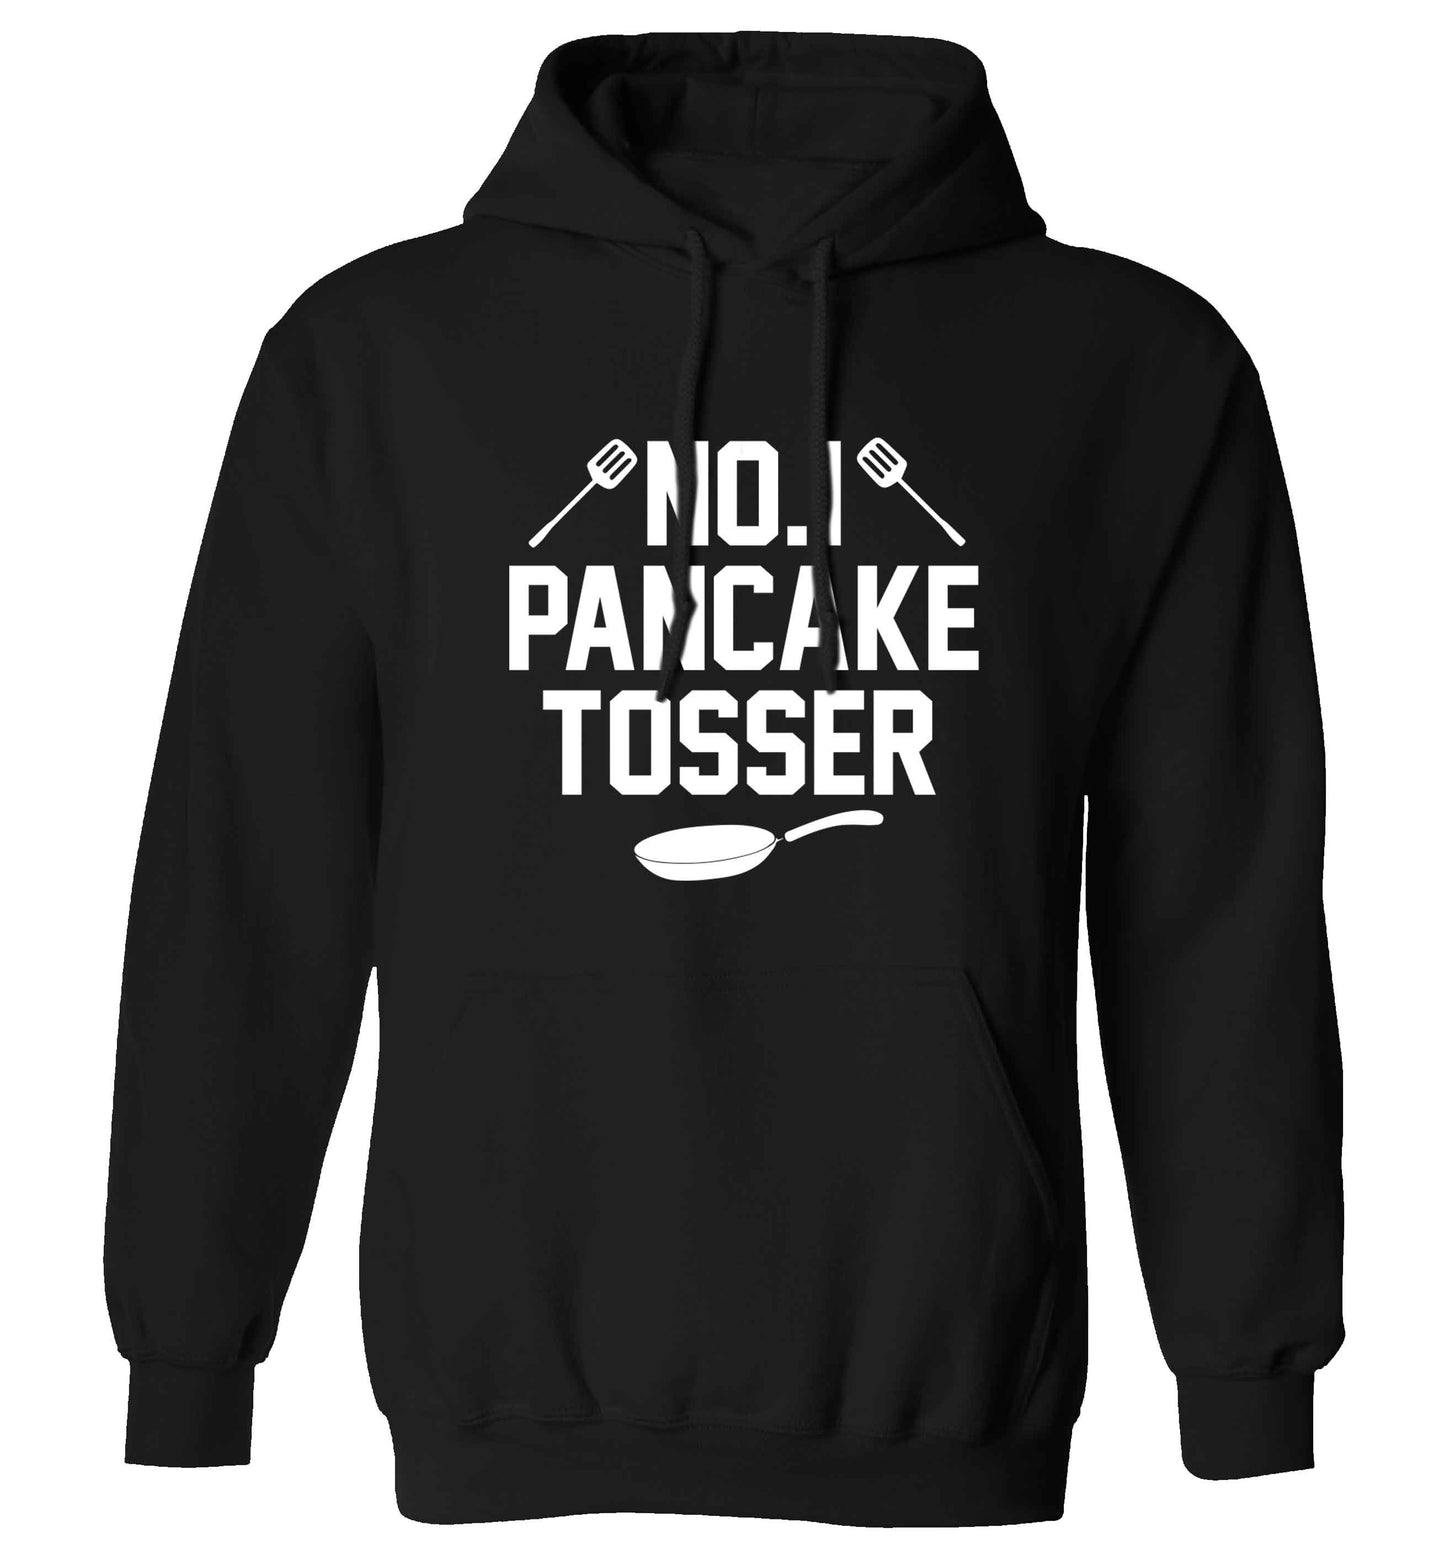 No.1 Pancake tosser adults unisex black hoodie 2XL